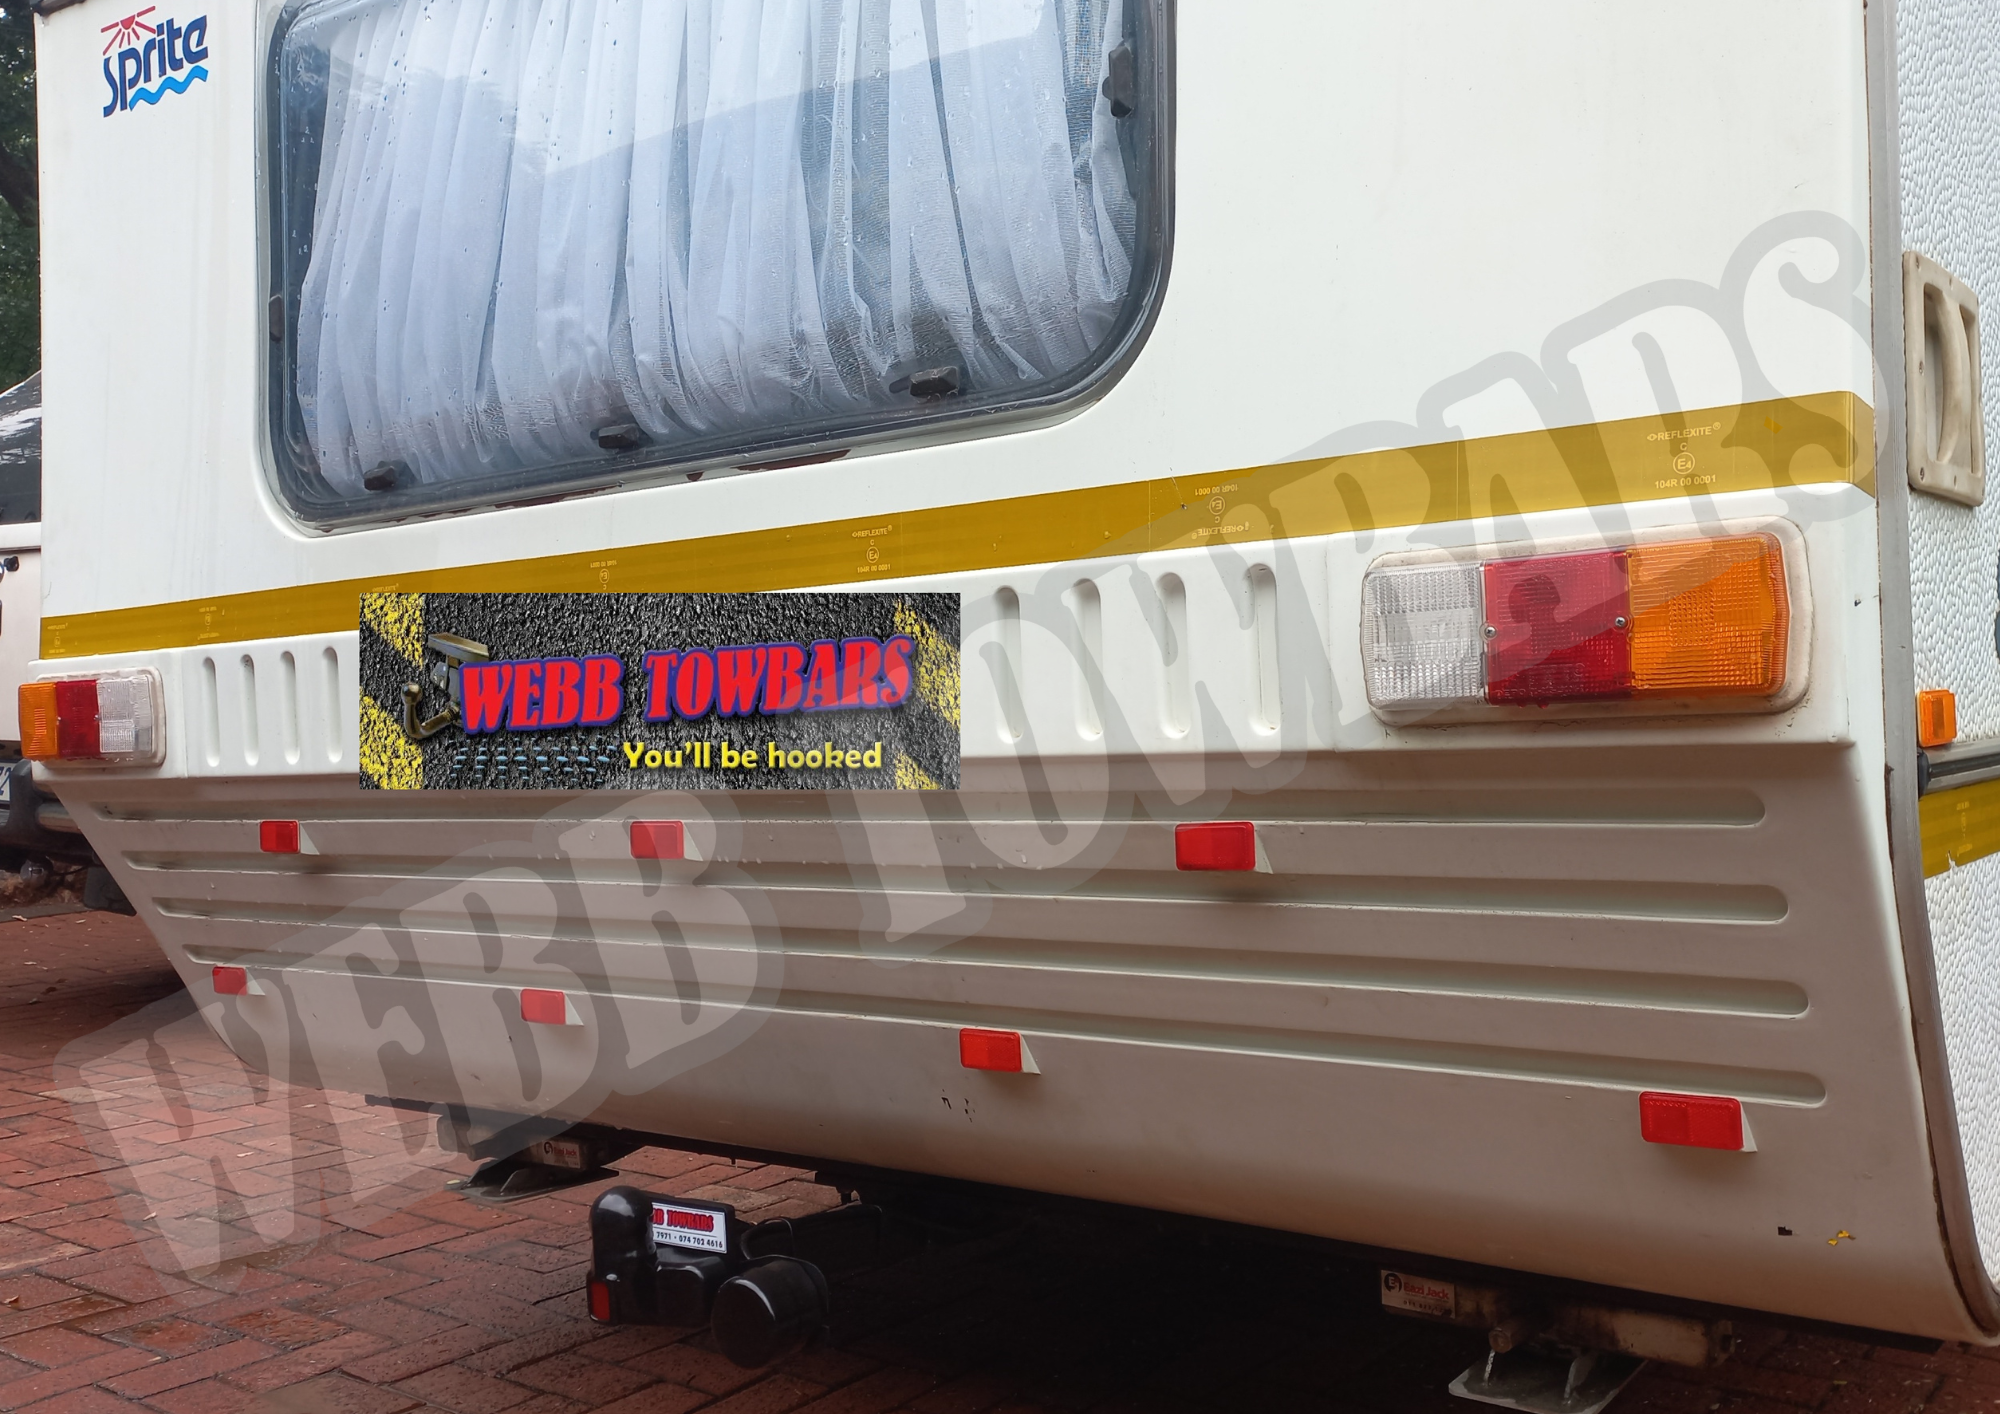 Sprite Sabre Caravan Standard Towbar | Webb Towbars Gauteng, South Africa